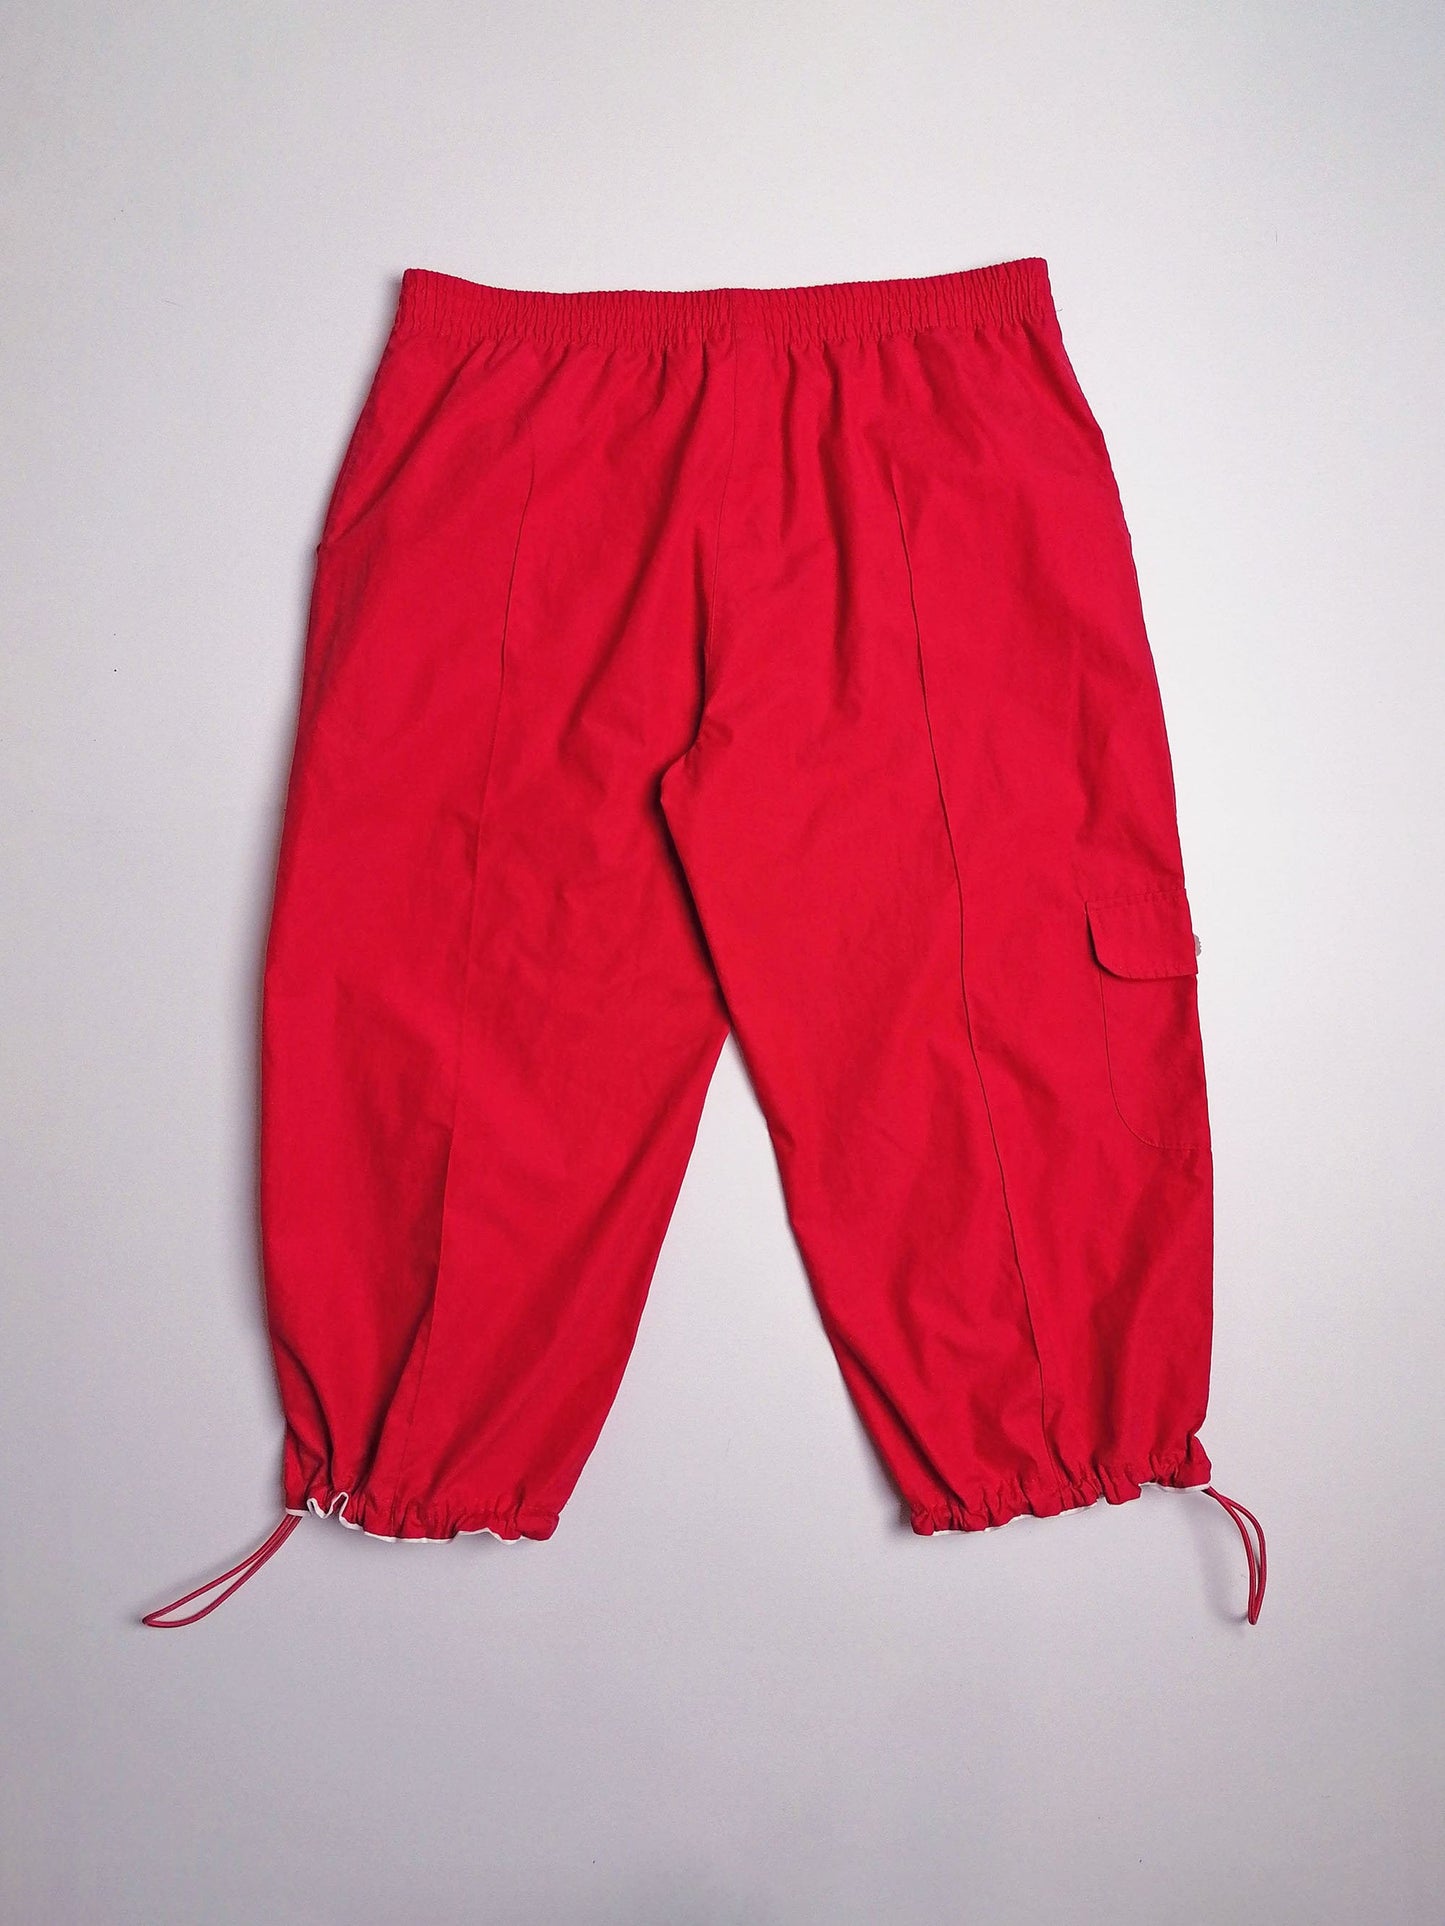 ADIDAS Y2K Track Pants Capris 3/4 Soft Shell Pants Pink - size S-M / UK 10